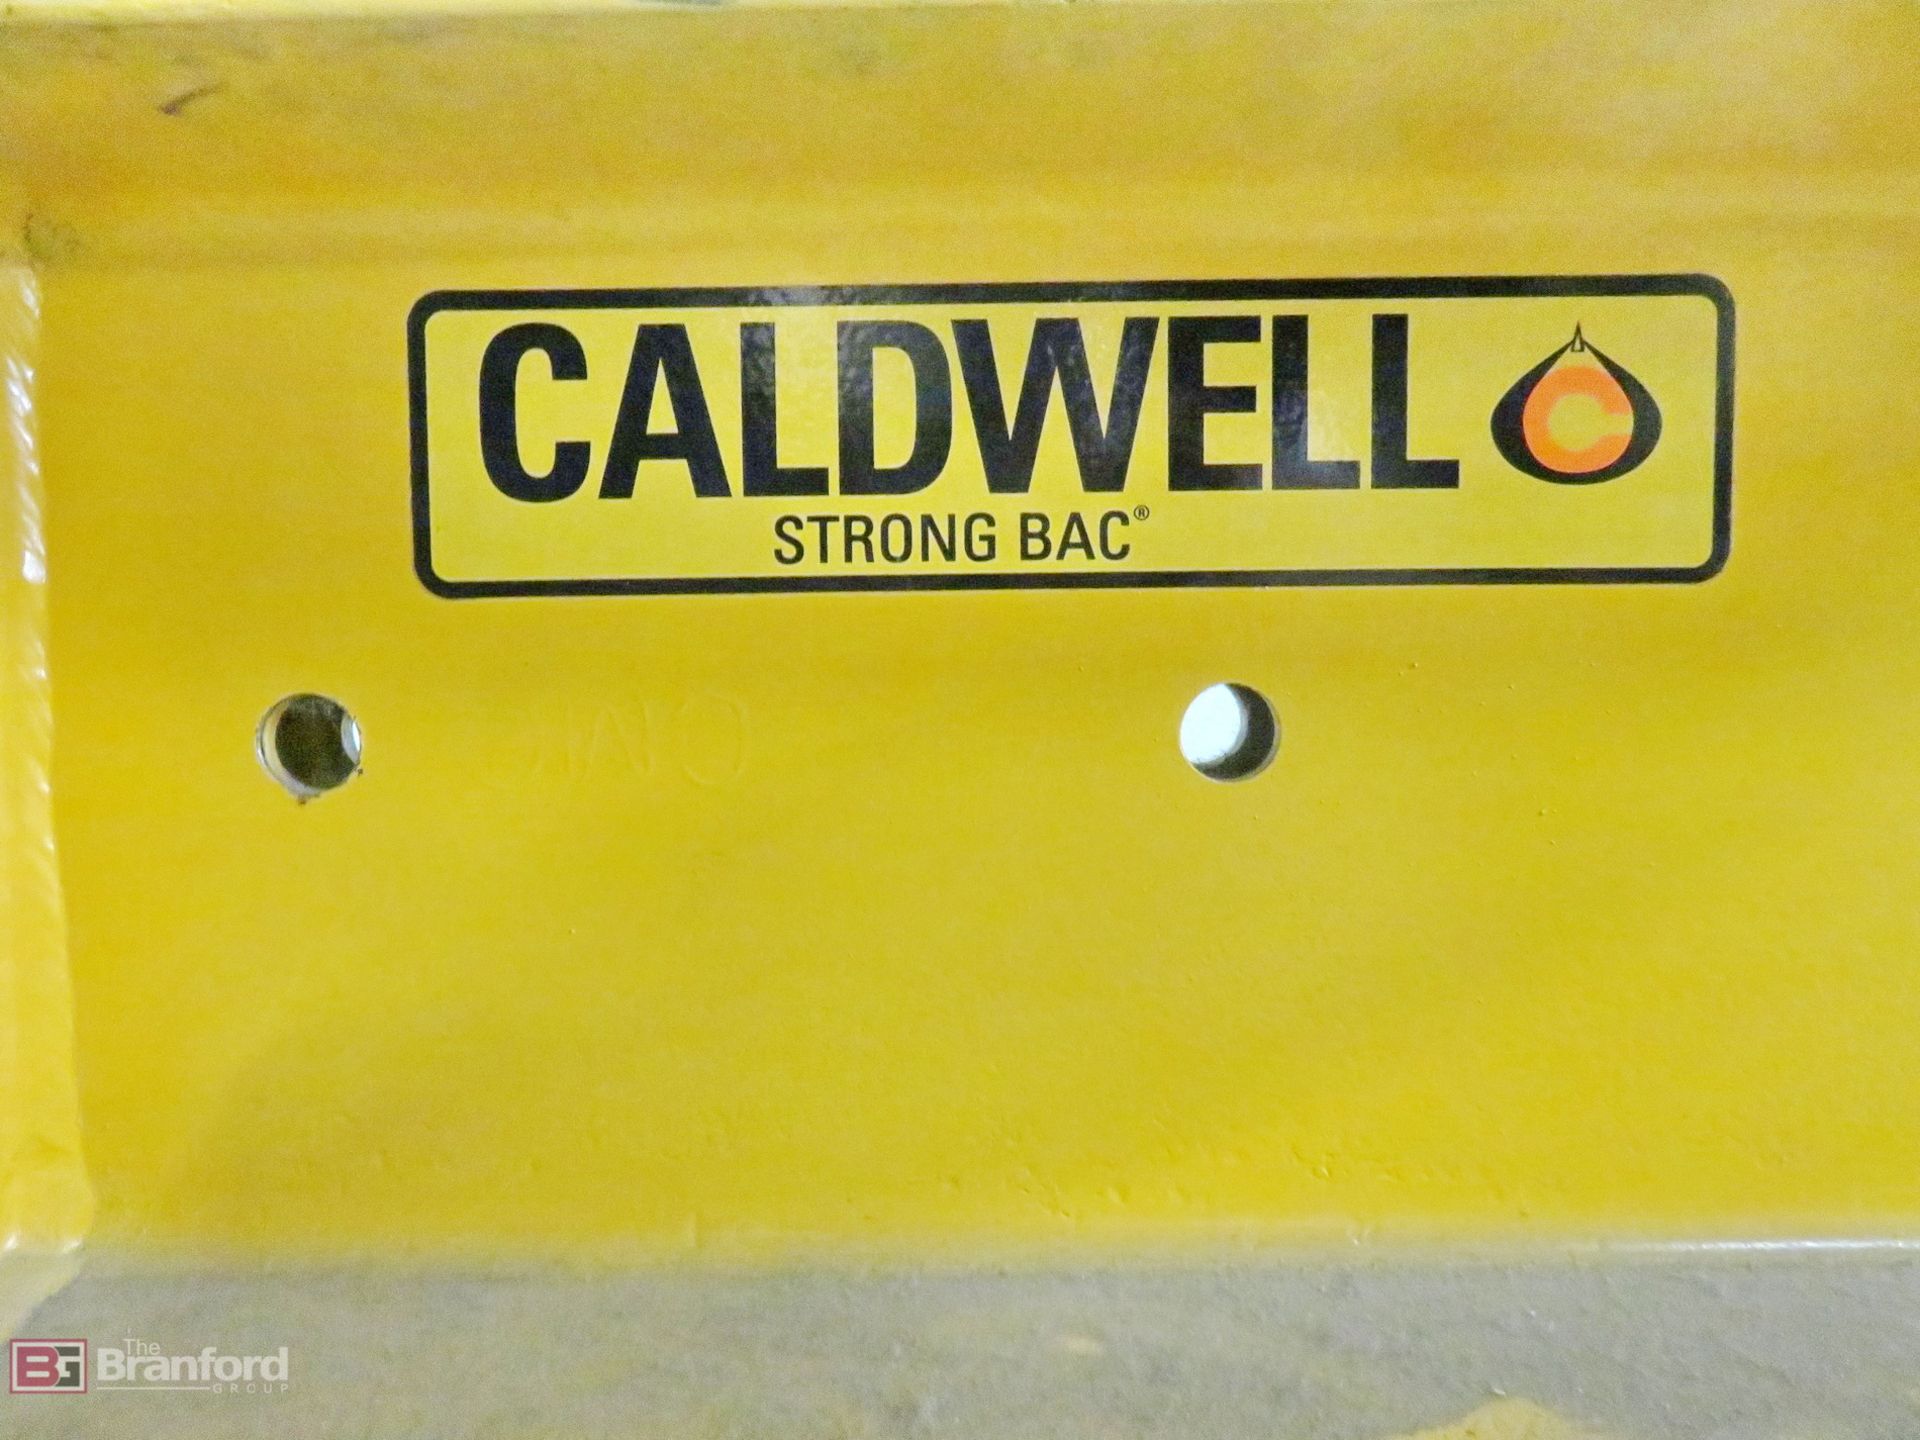 Caldwell Strong-Bac 4-ton x 8' adjustable spreader bar - Image 2 of 4